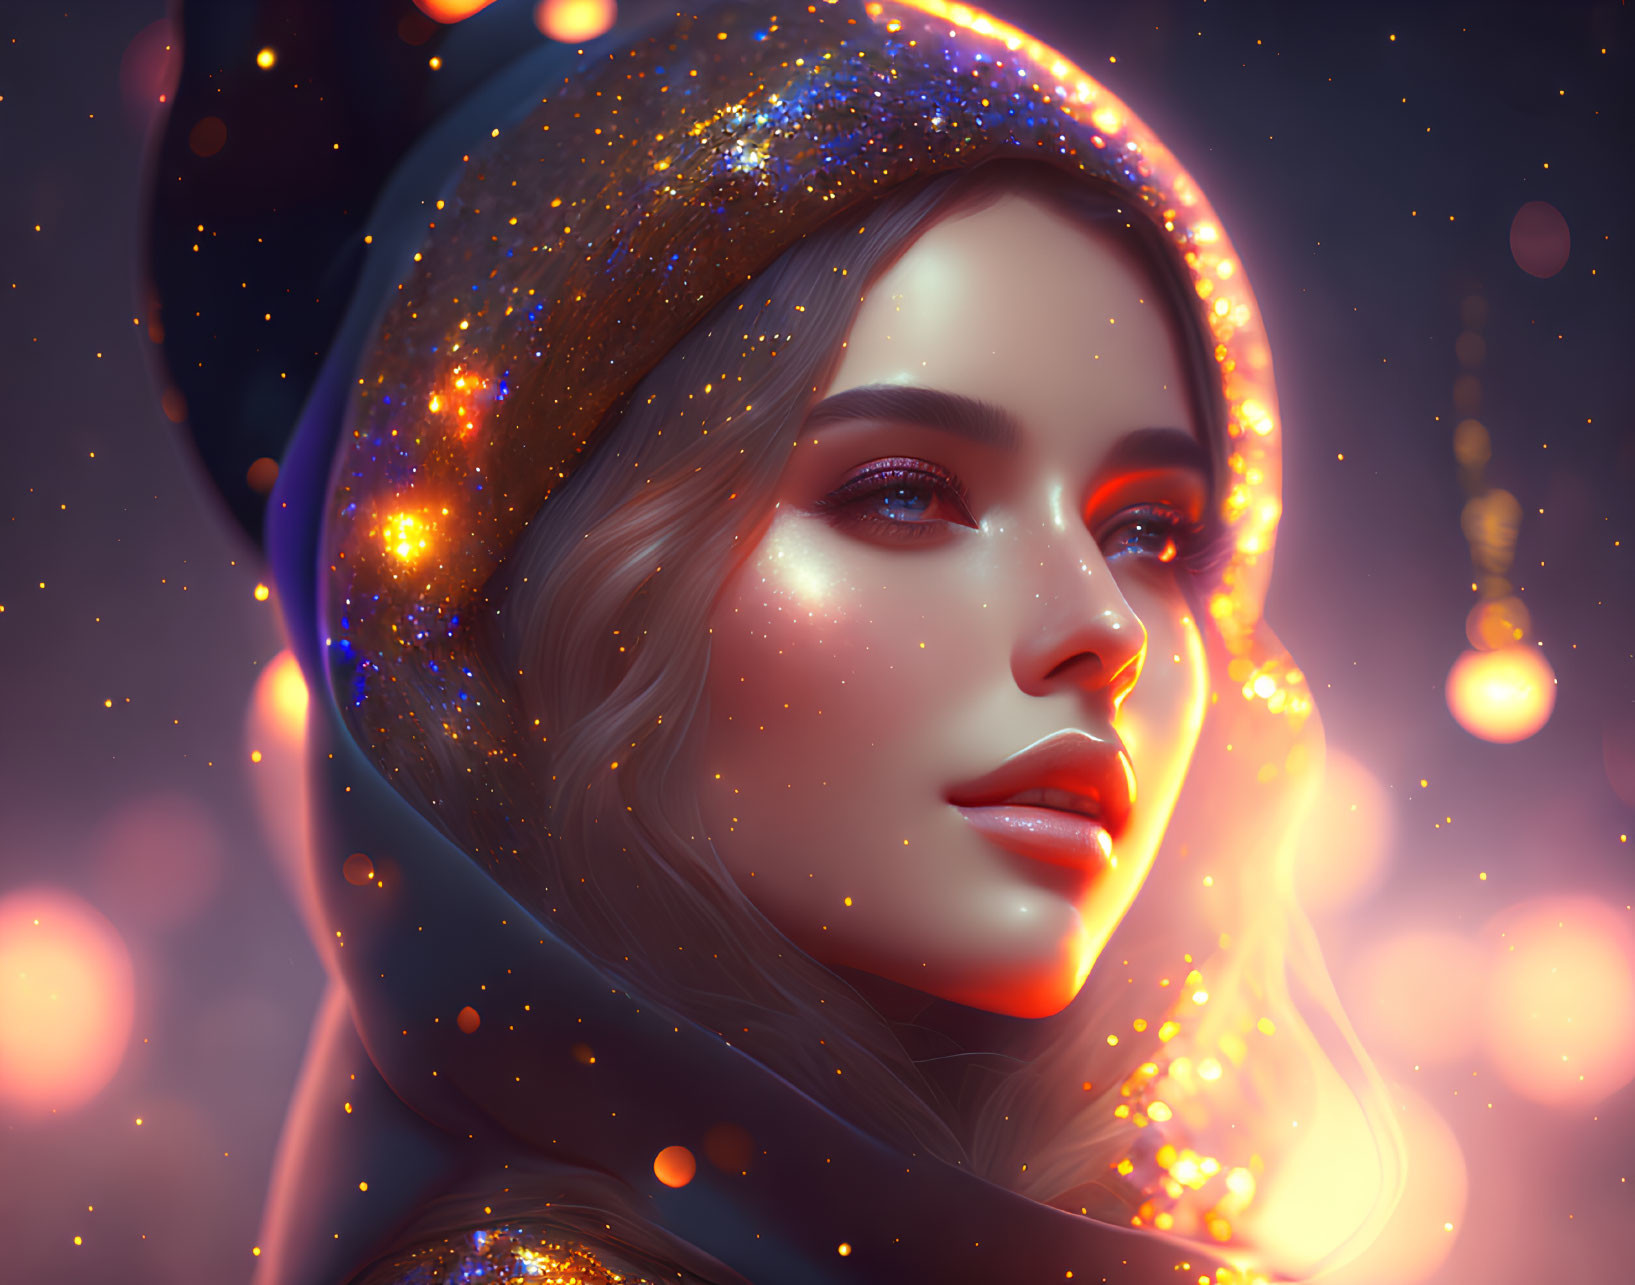 Cosmic-themed digital artwork of a glowing woman in star-filled hood